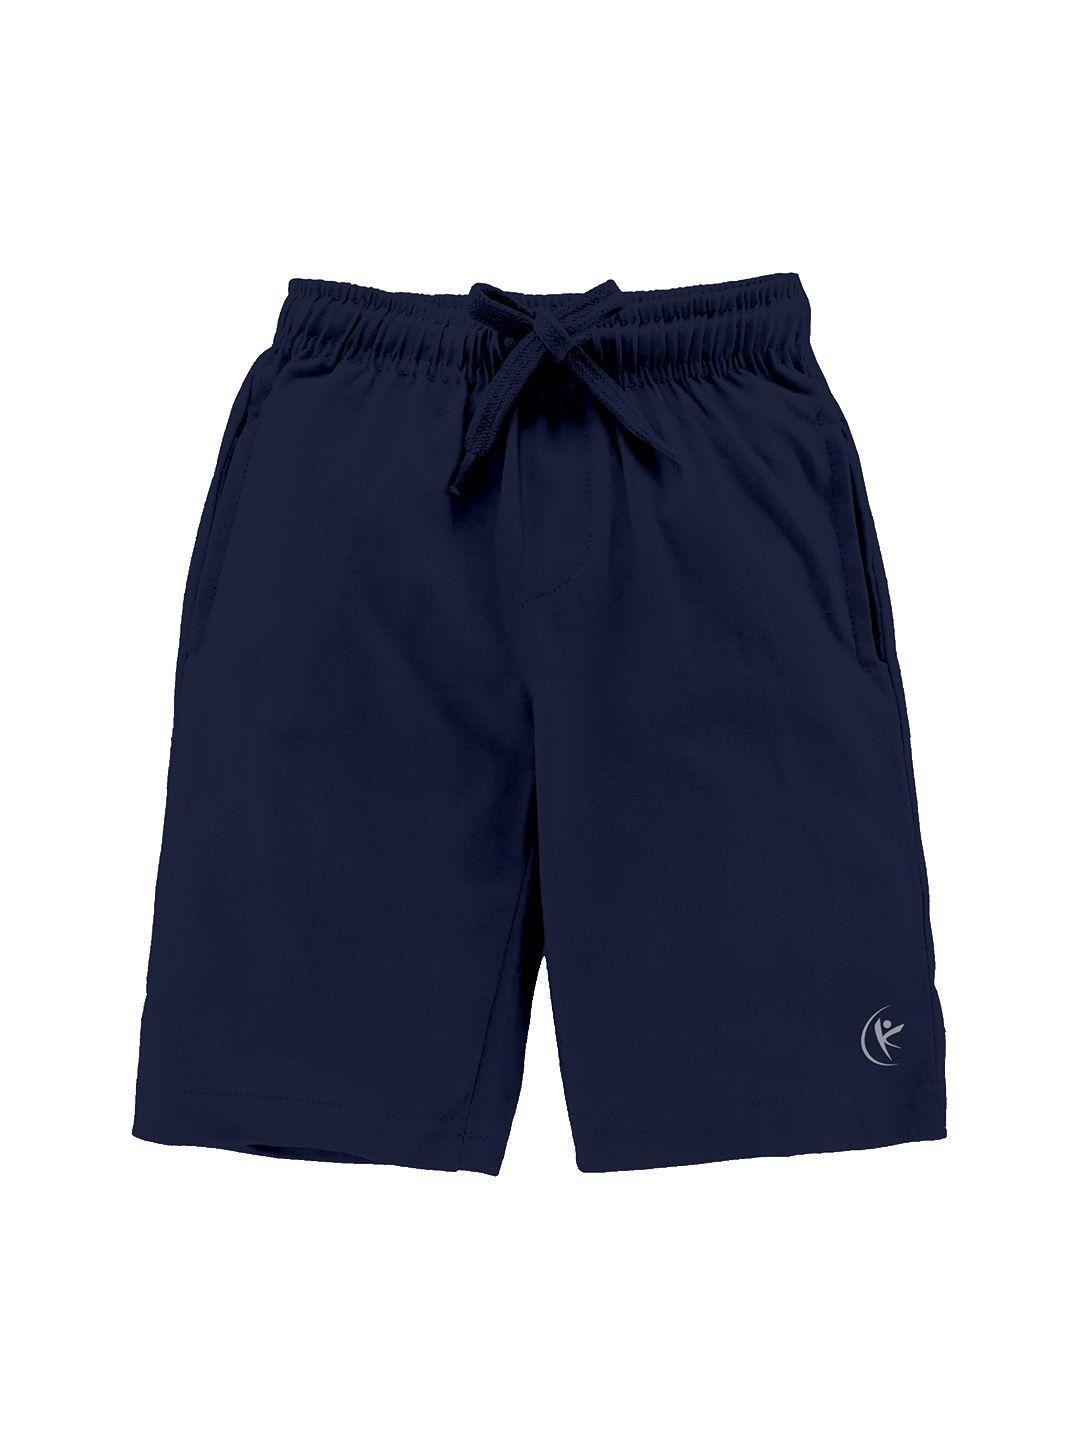 kiddopanti-boys-navy-blue-cotton-shorts